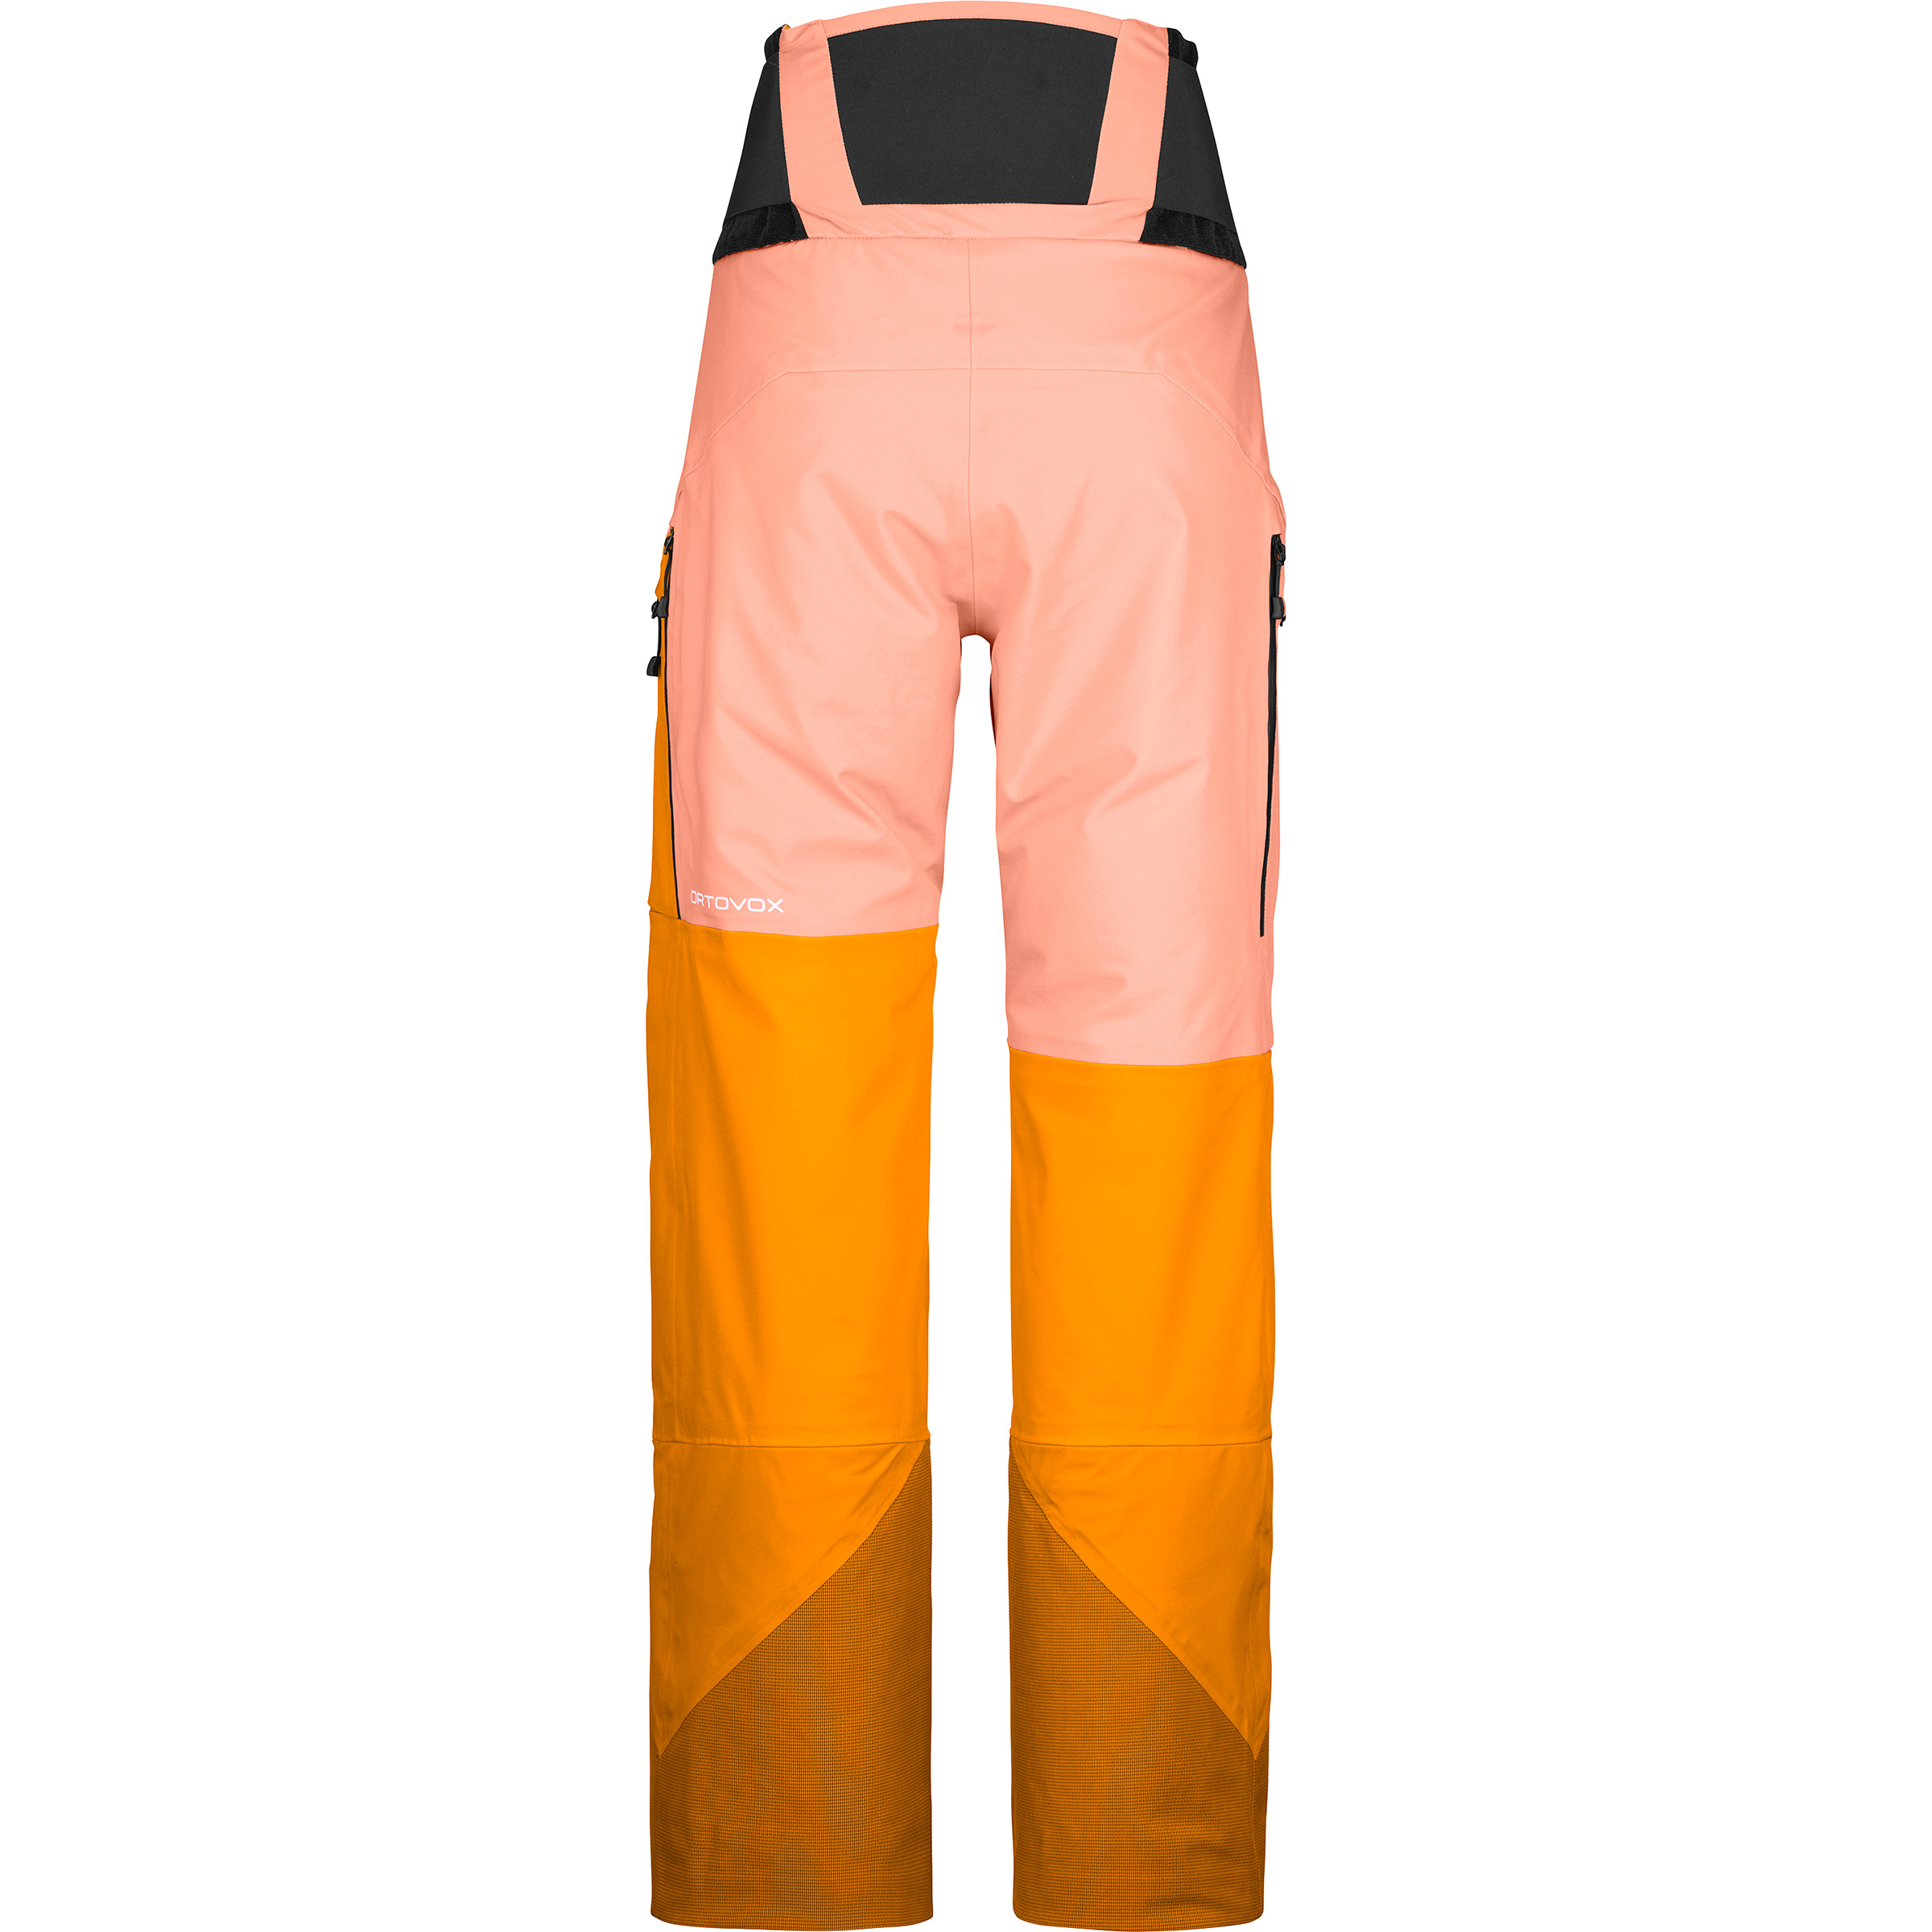 Ortovox 3L Guardian Shell Pants - Ski trousers Women's, Free EU Delivery